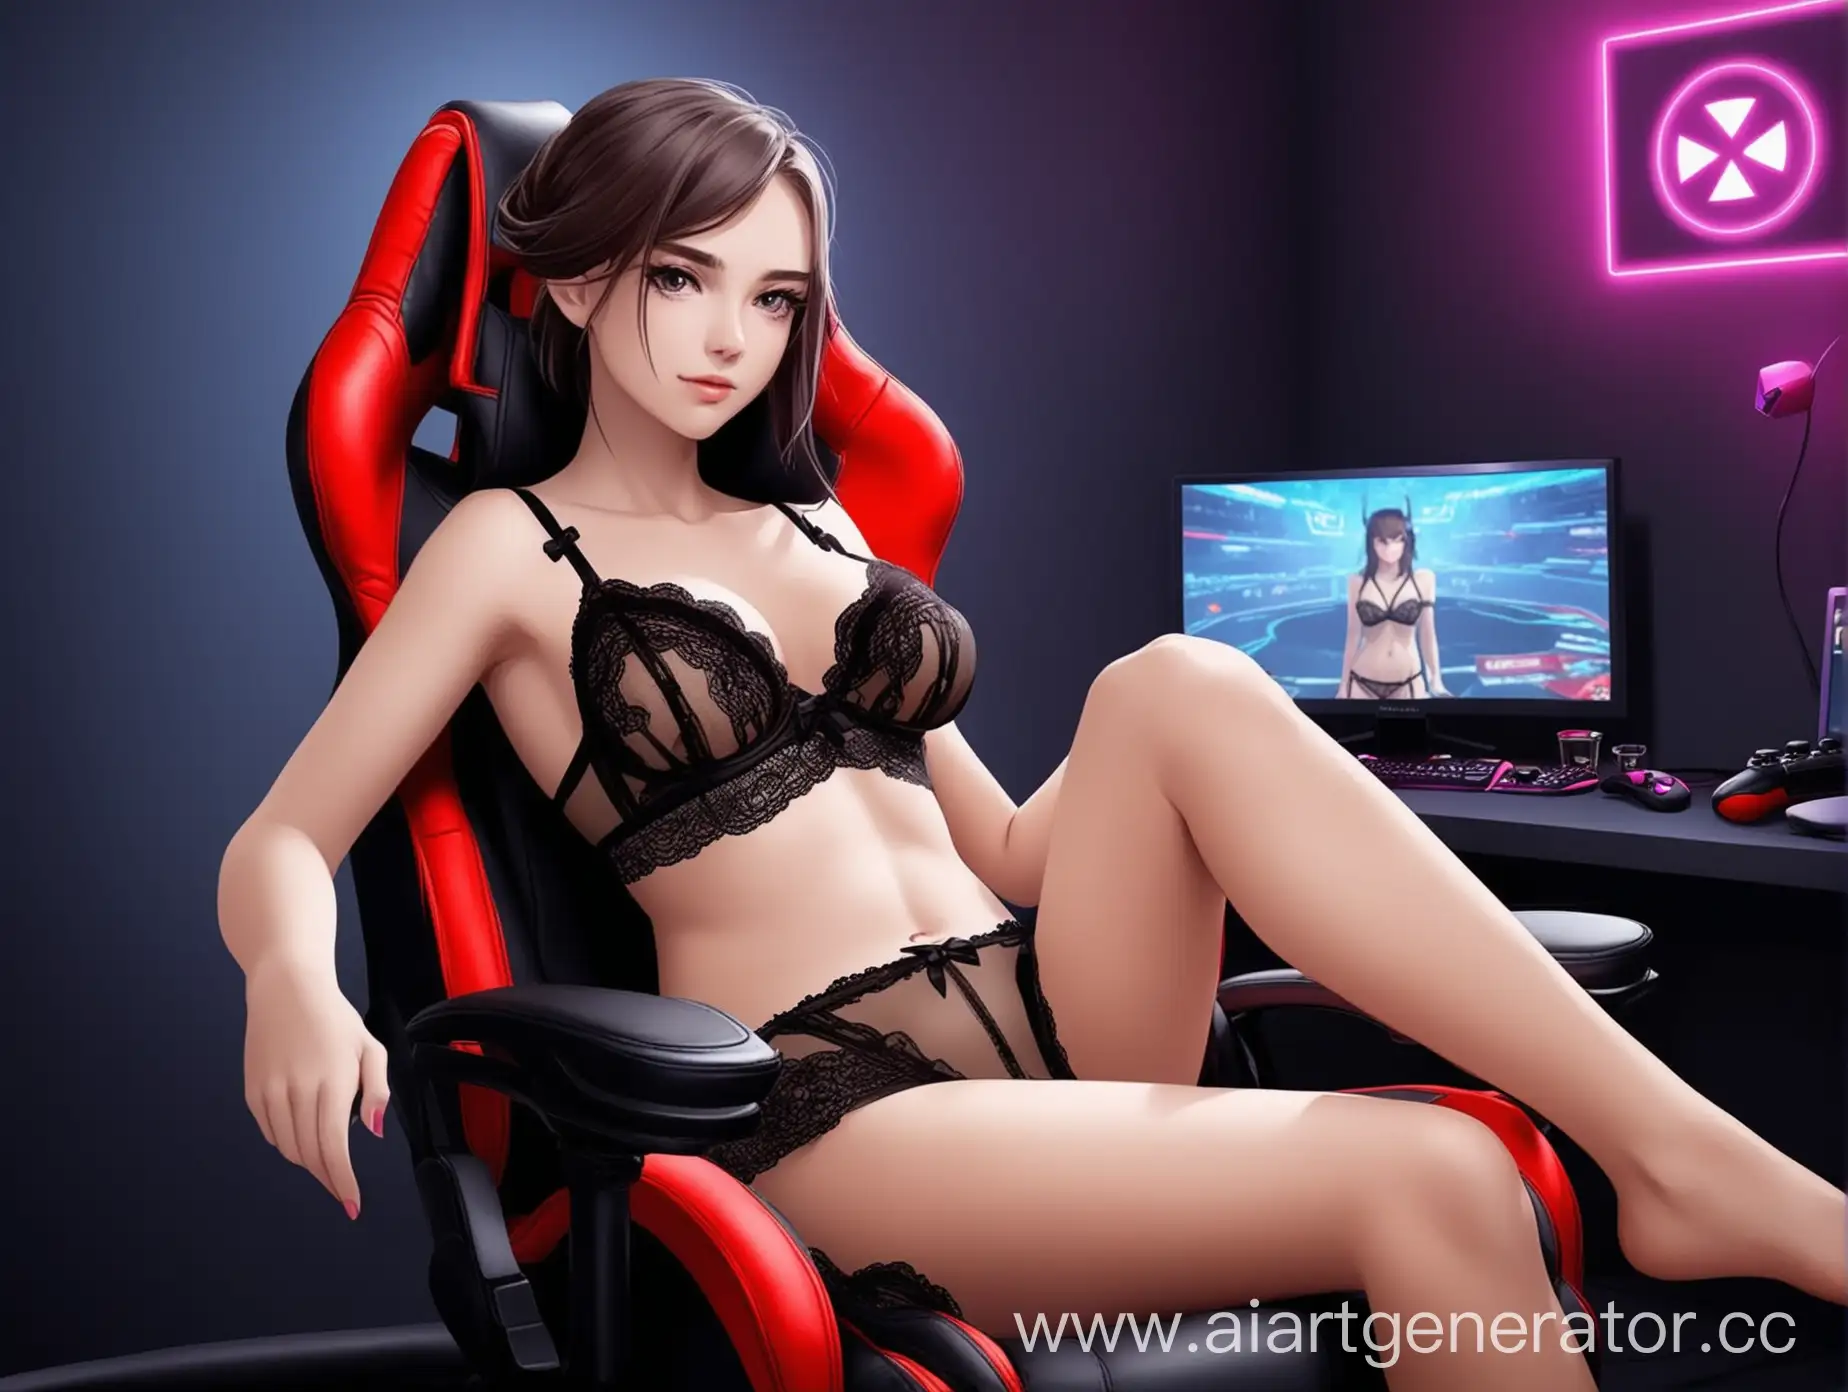 Sensual-Woman-Relaxing-in-Gaming-Chair-Wearing-Lingerie